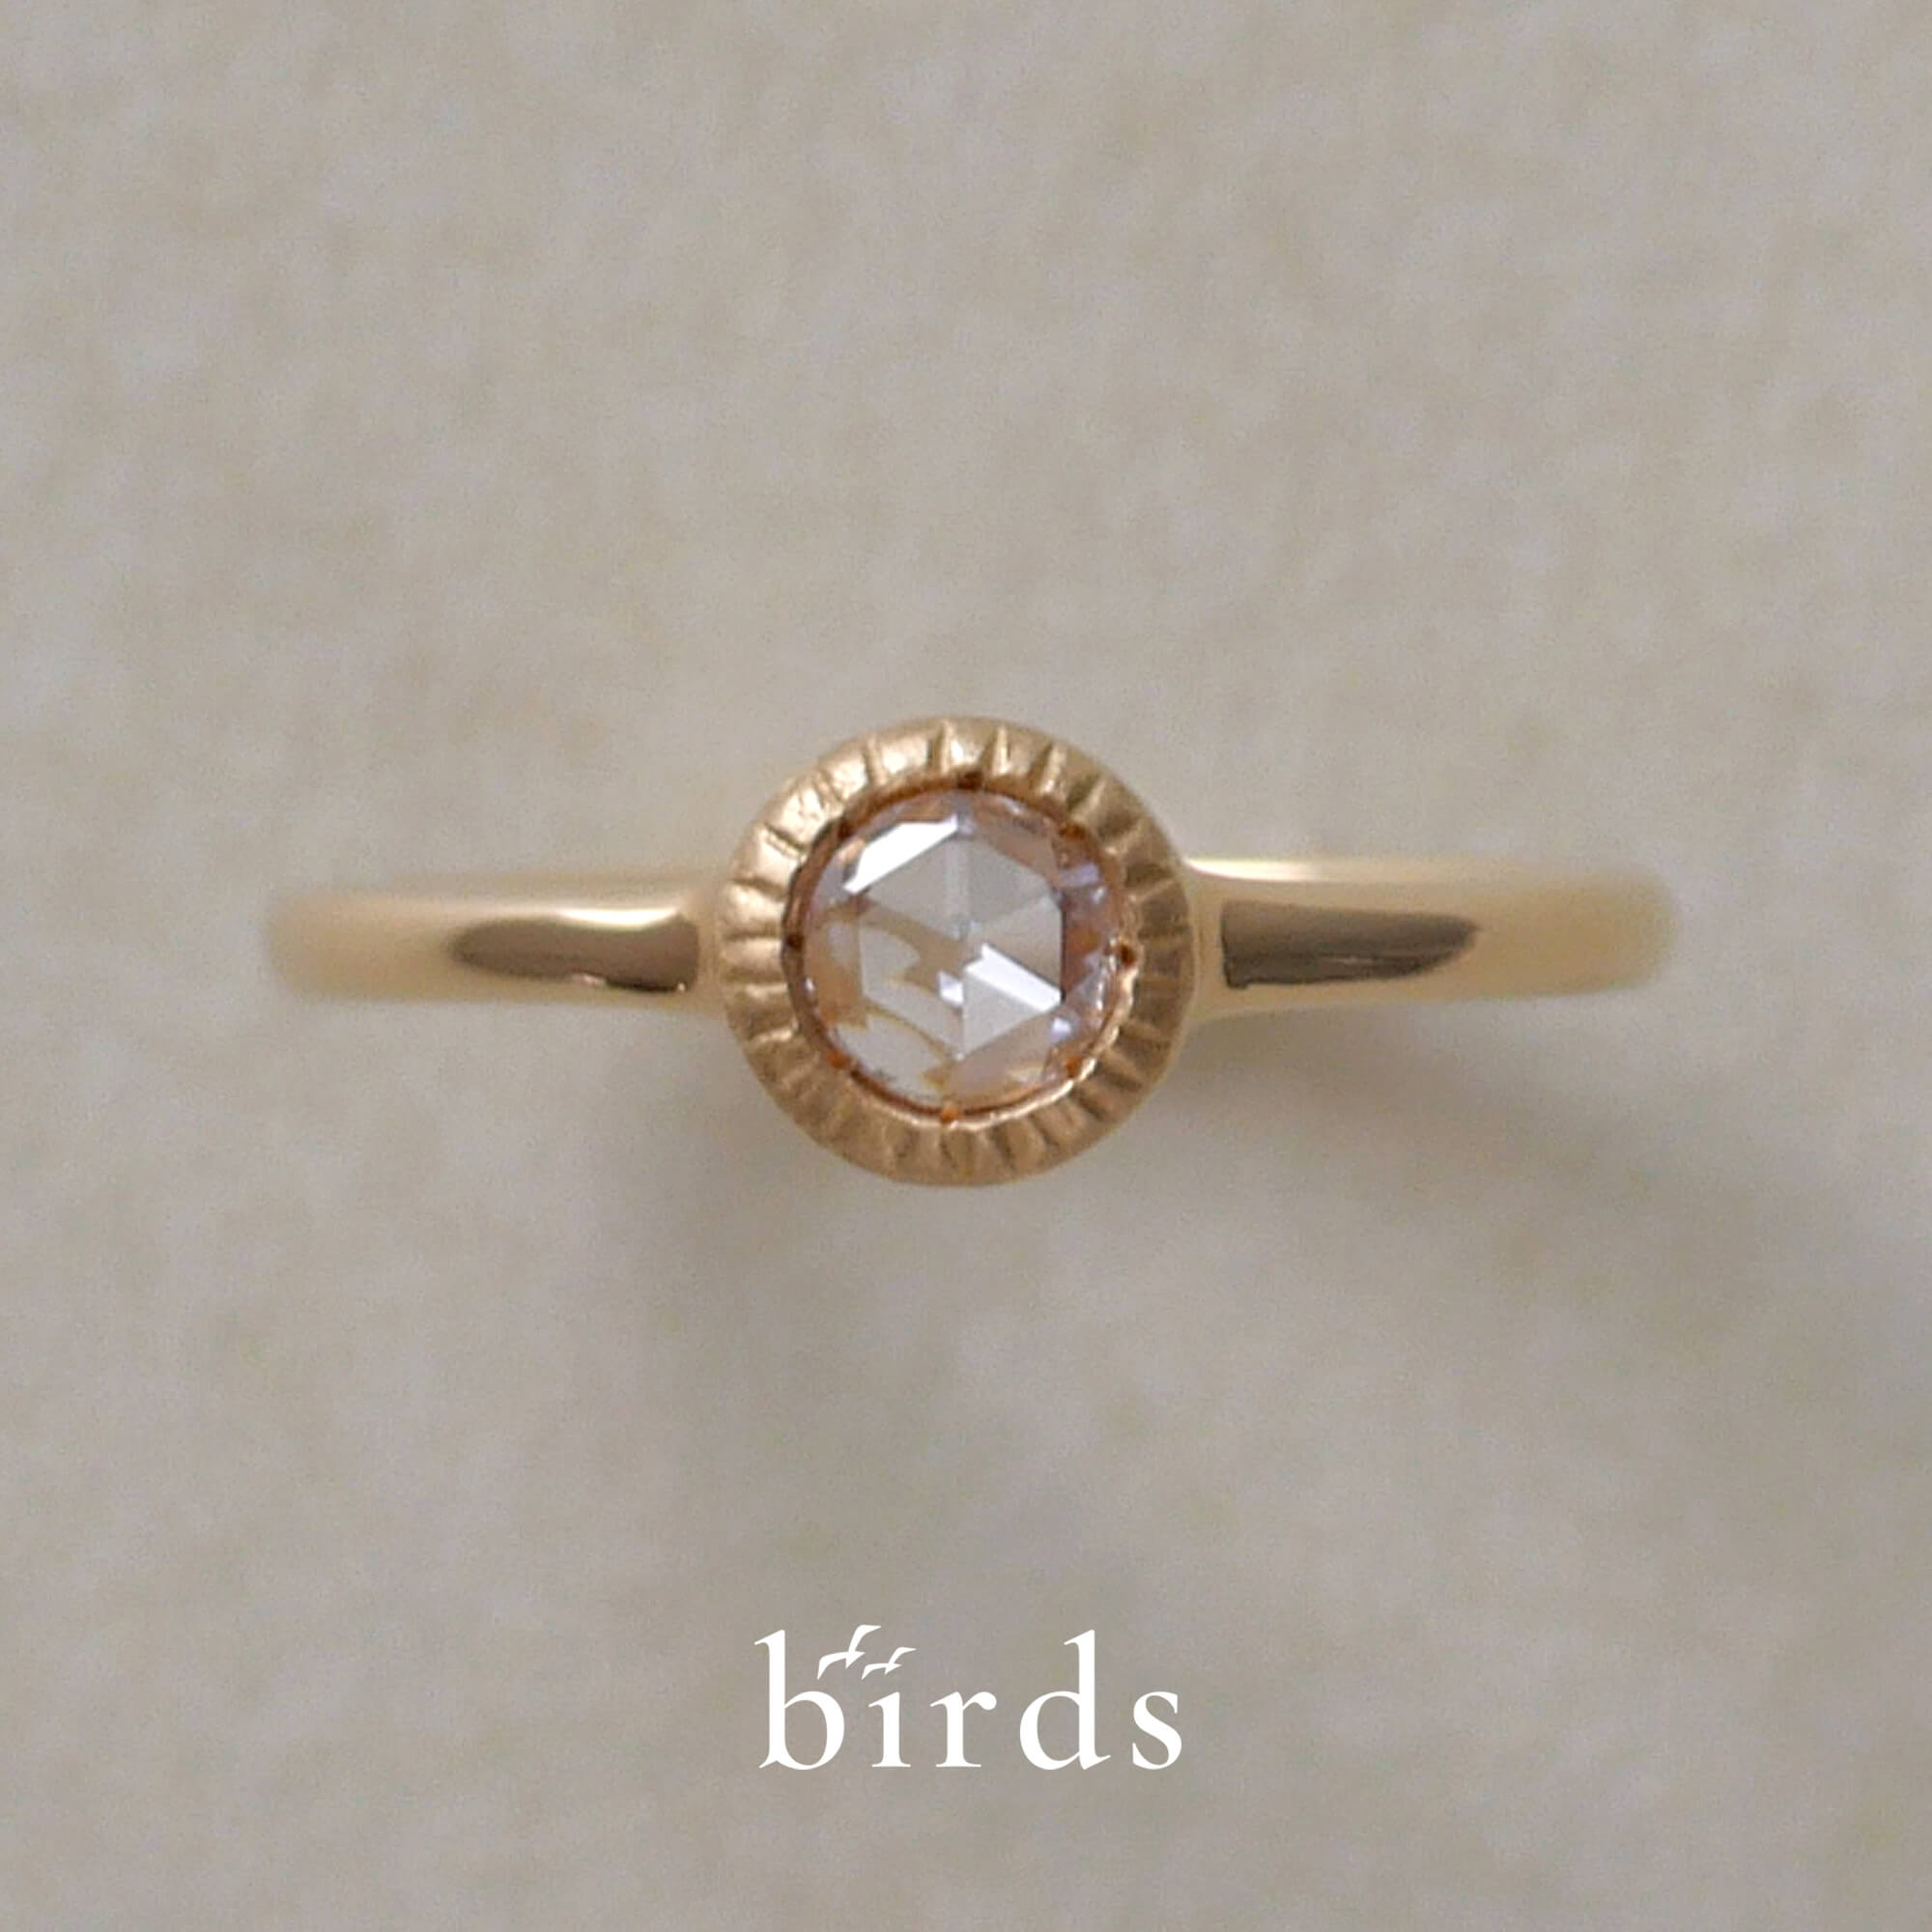 birdsバーズの婚約指輪エンゲージリングEngagementringのjourneyジャーニー